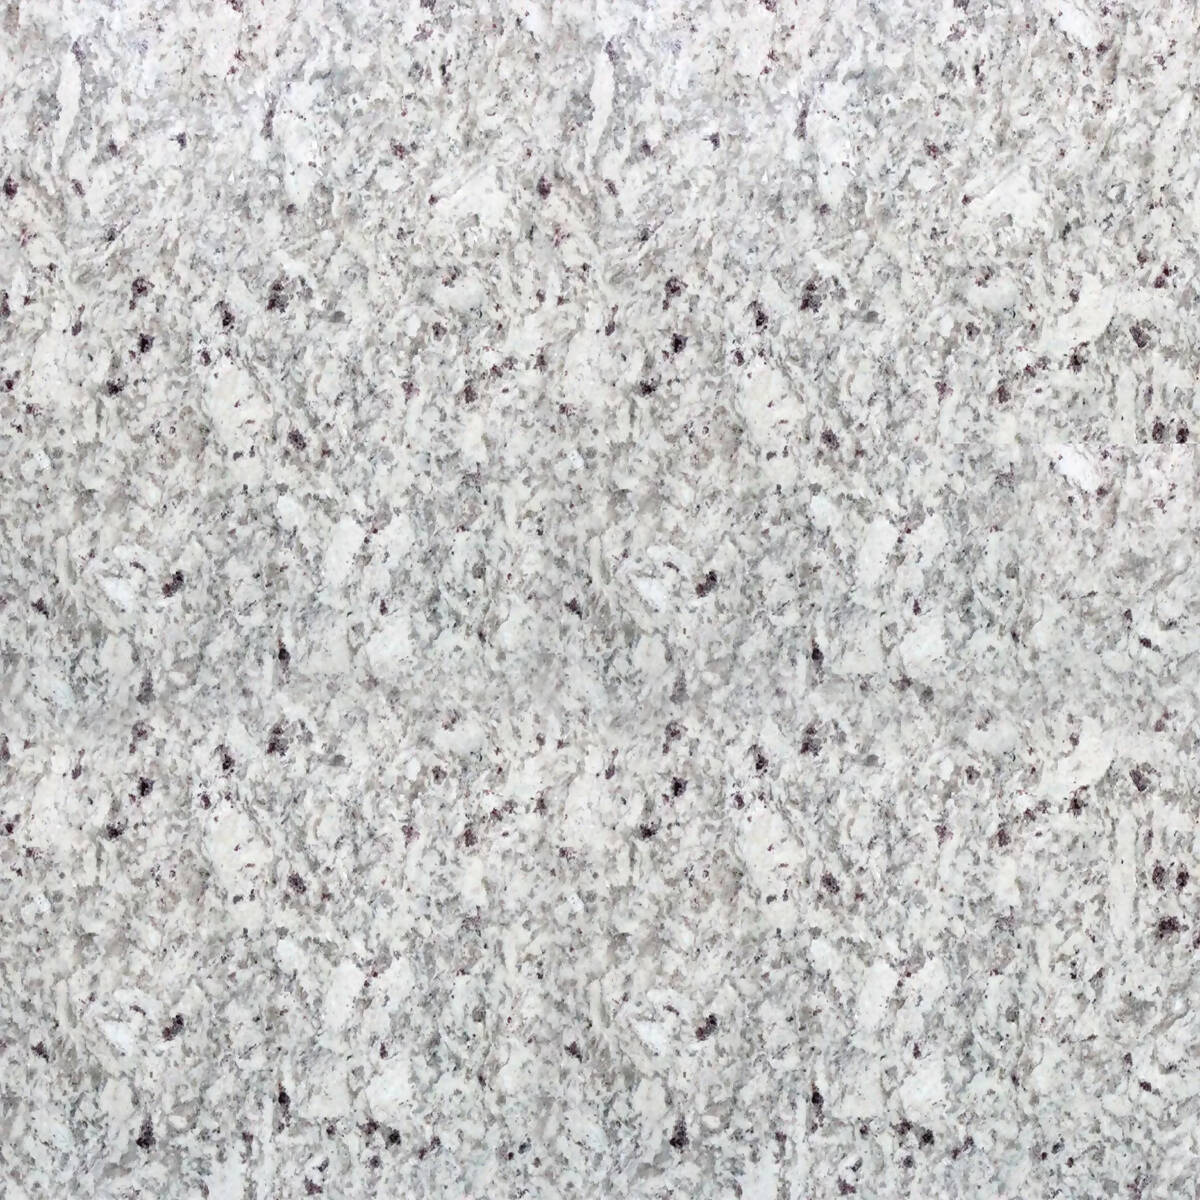 MOON WHITE GRANITE,Granite,Virtual Stone,www.work-tops.com